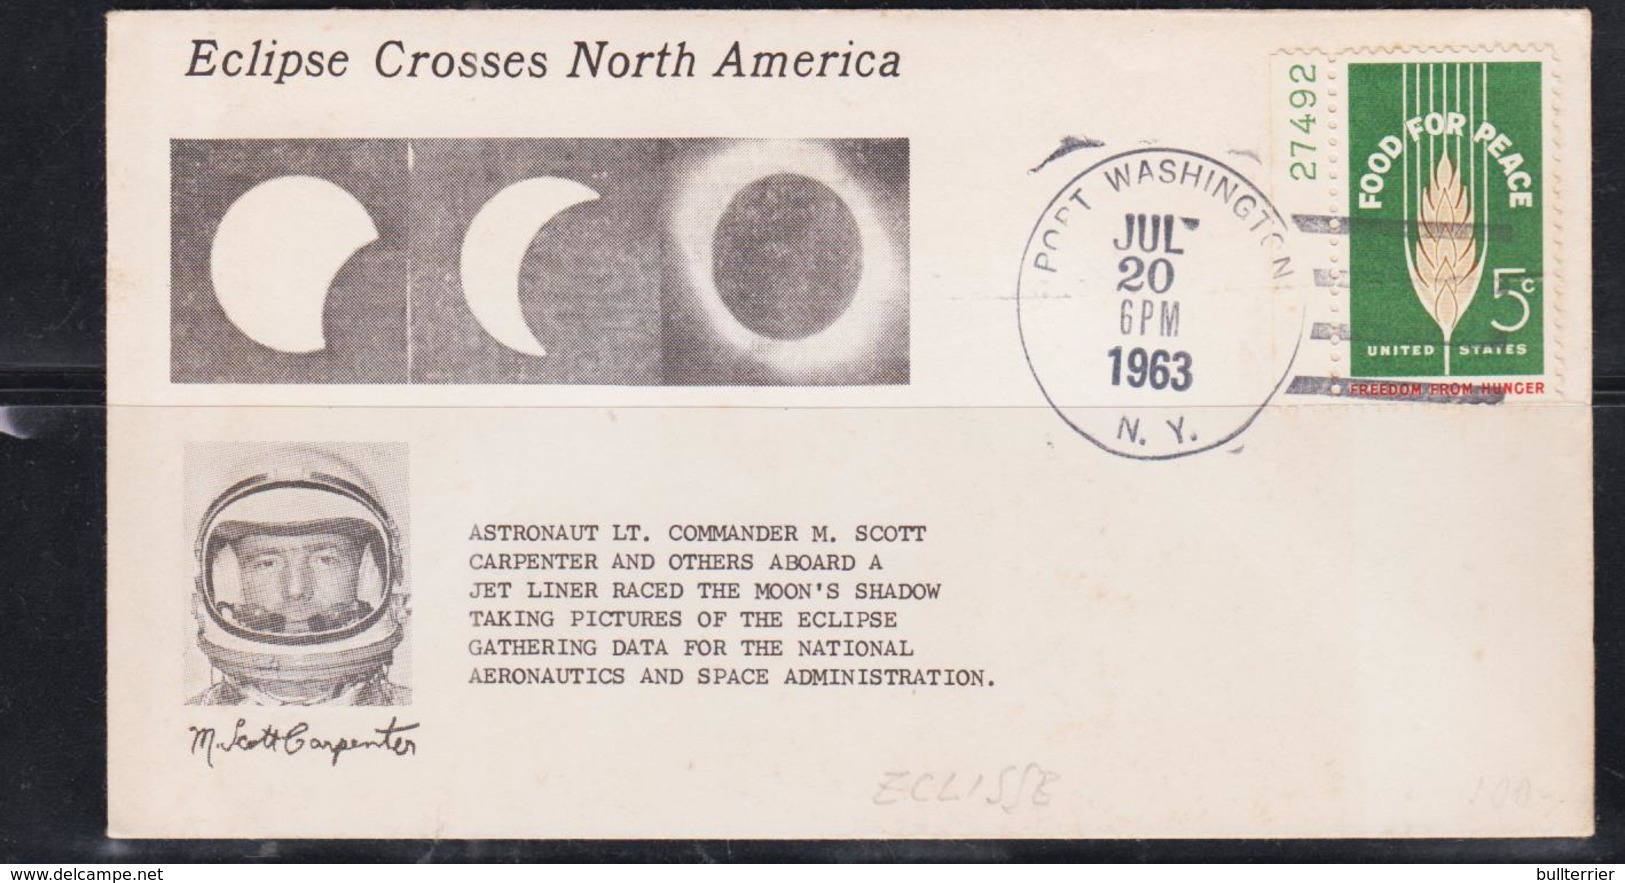 SPACE  - USA-  1963 - MOON ECLIPSE  COVER WITH PORT WASHINGTON  POSTMARK  JUL 20 1963 - Etats-Unis